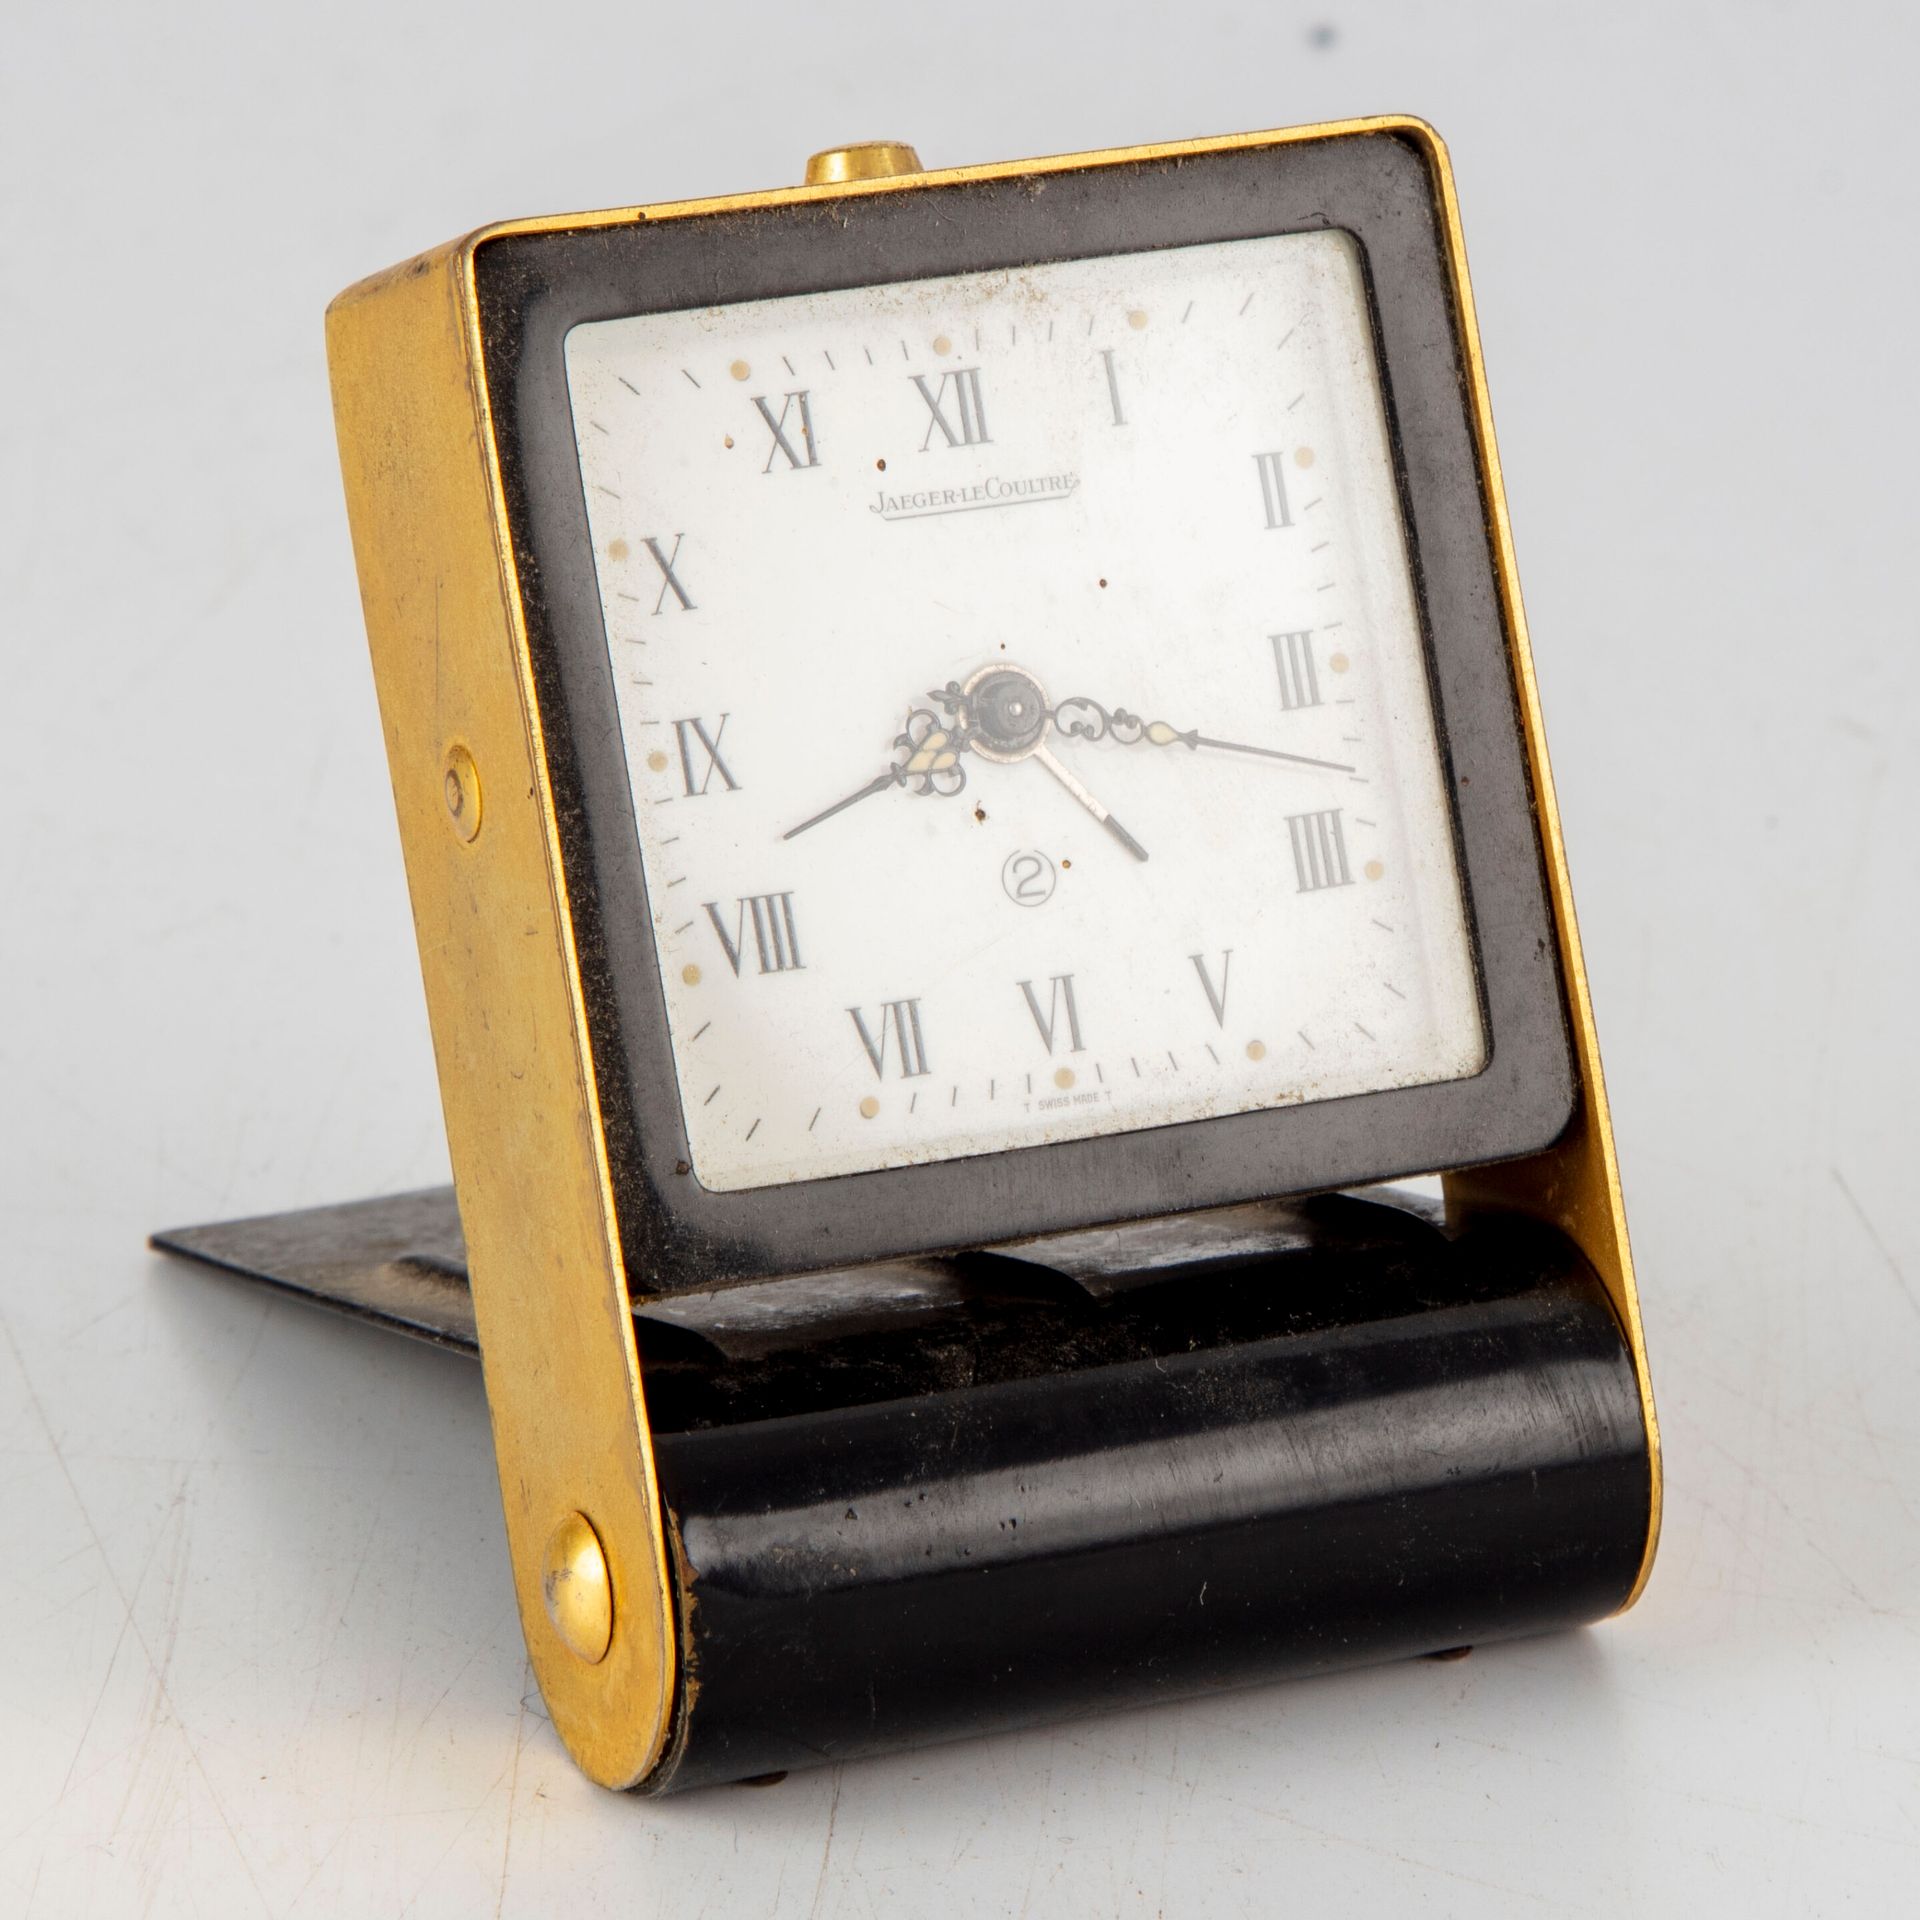 Null 洁格

带闹钟功能的桌钟或旅行钟，金色和黑色漆面金属材质

8 x 5,5 x 2 厘米

小型氧化